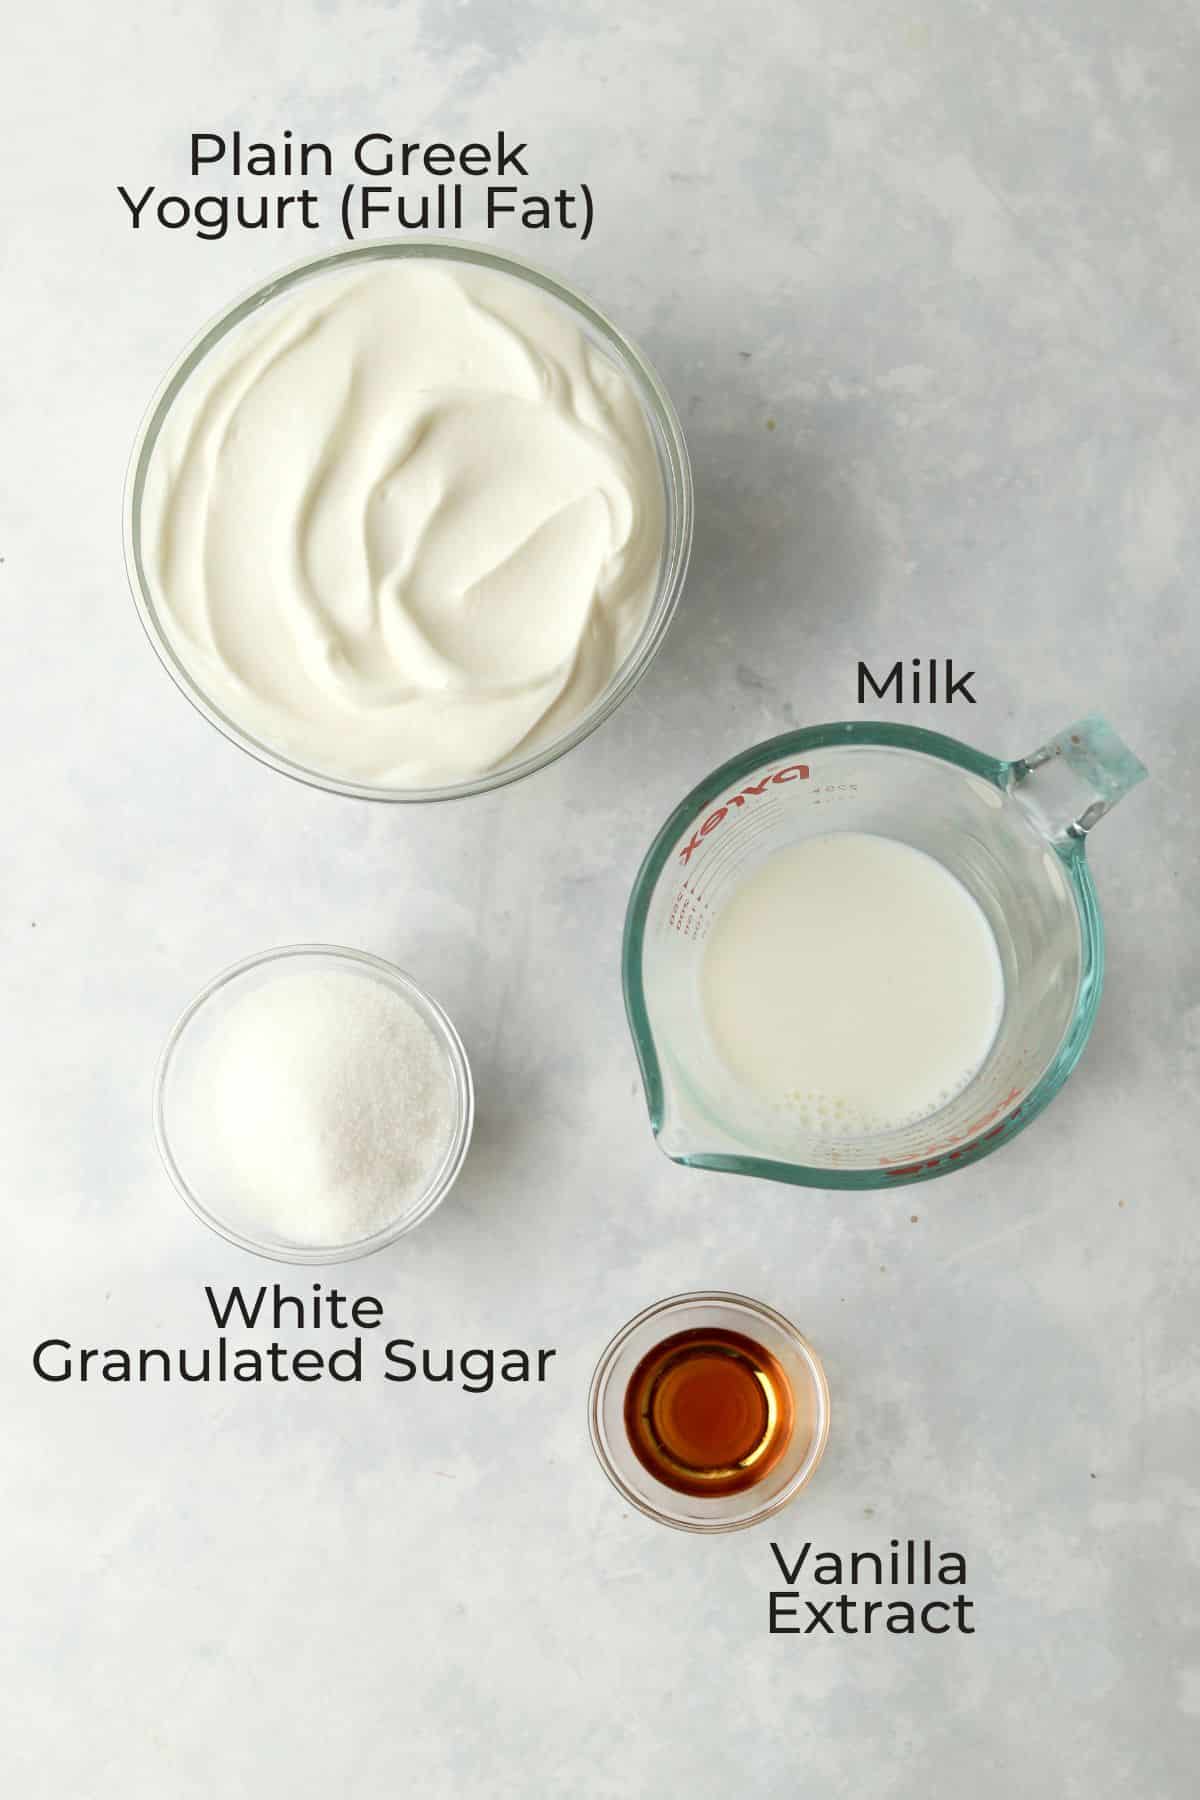 Greek Yogurt, milk, sugar, and vanilla in glass bowls.